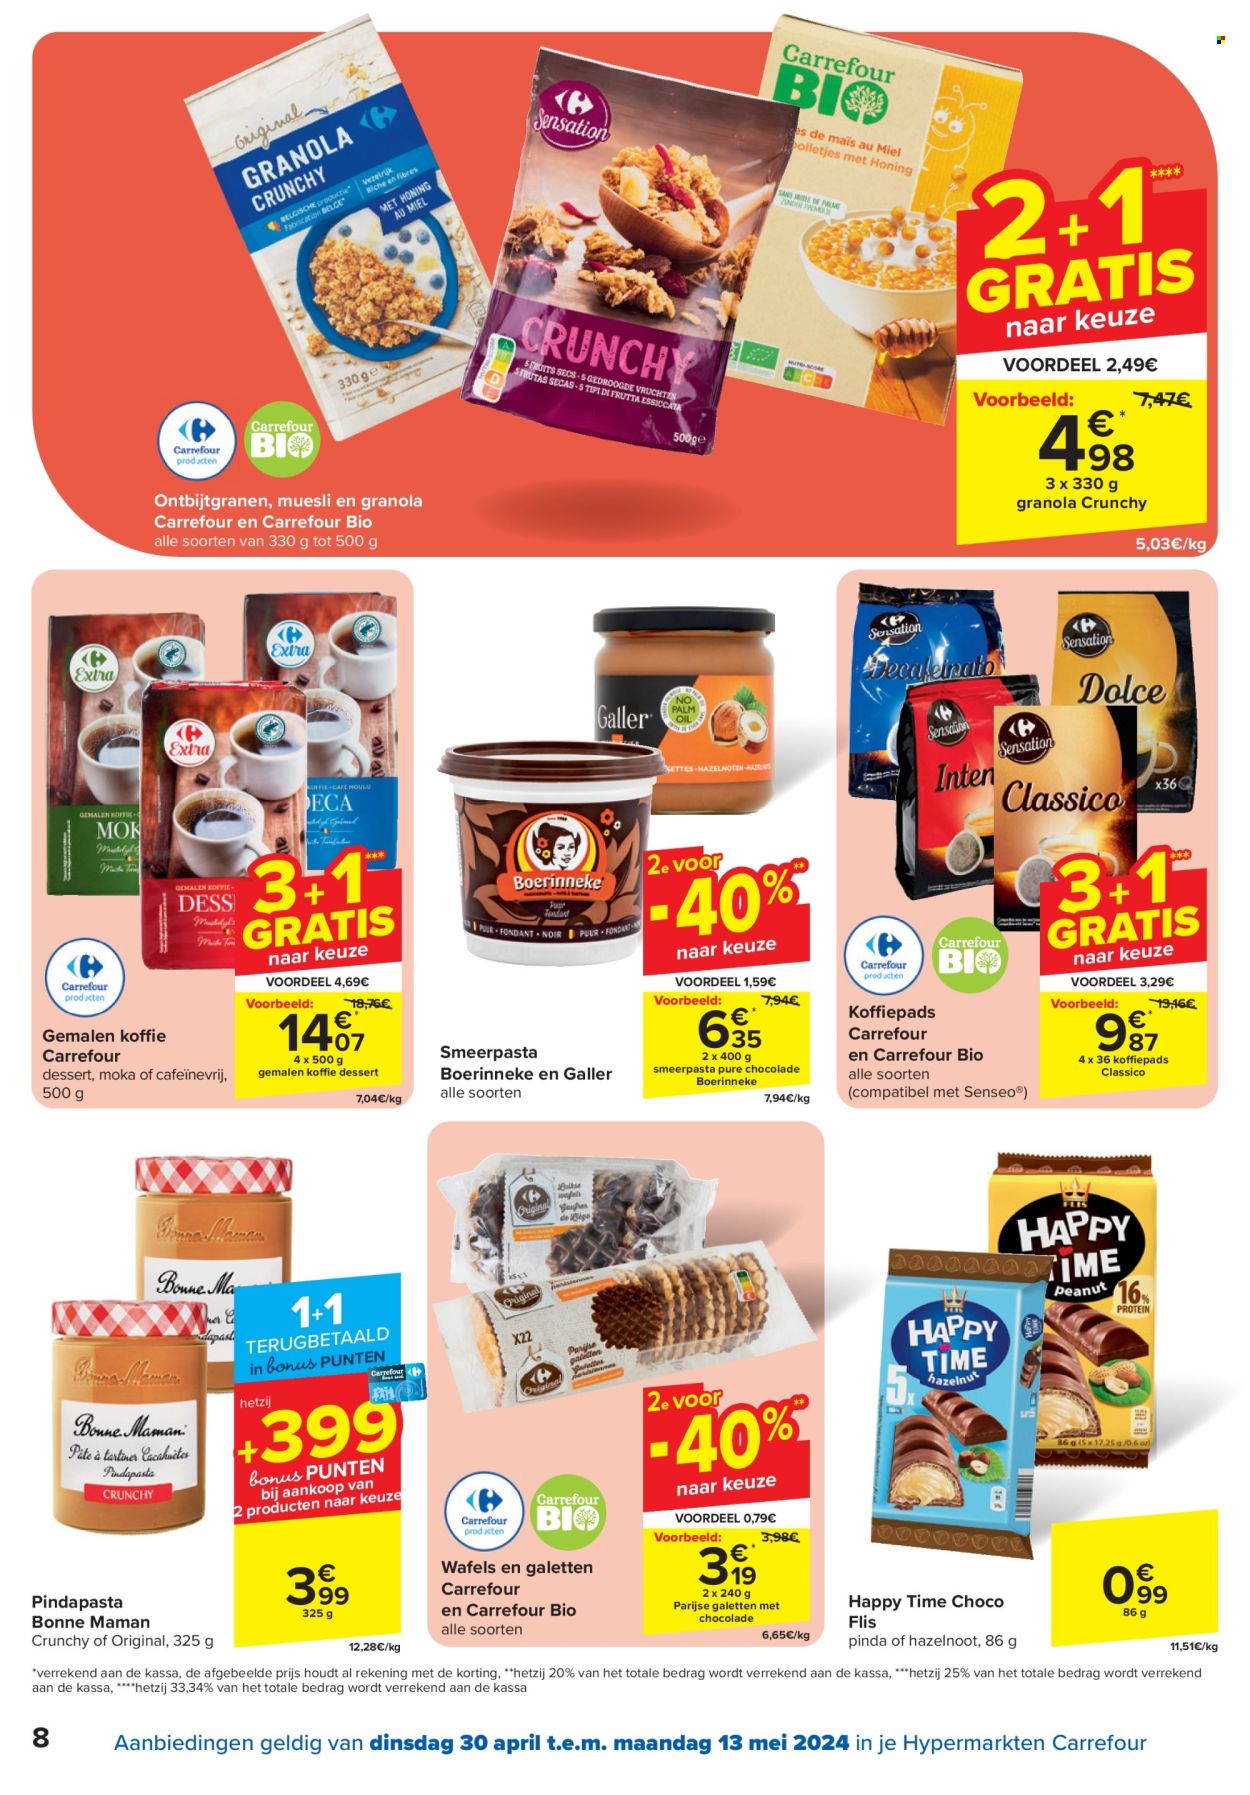 thumbnail - Catalogue Carrefour hypermarkt - 30/04/2024 - 13/05/2024 - Produits soldés - dessert, granola, müsli, céréales, Senseo. Page 8.